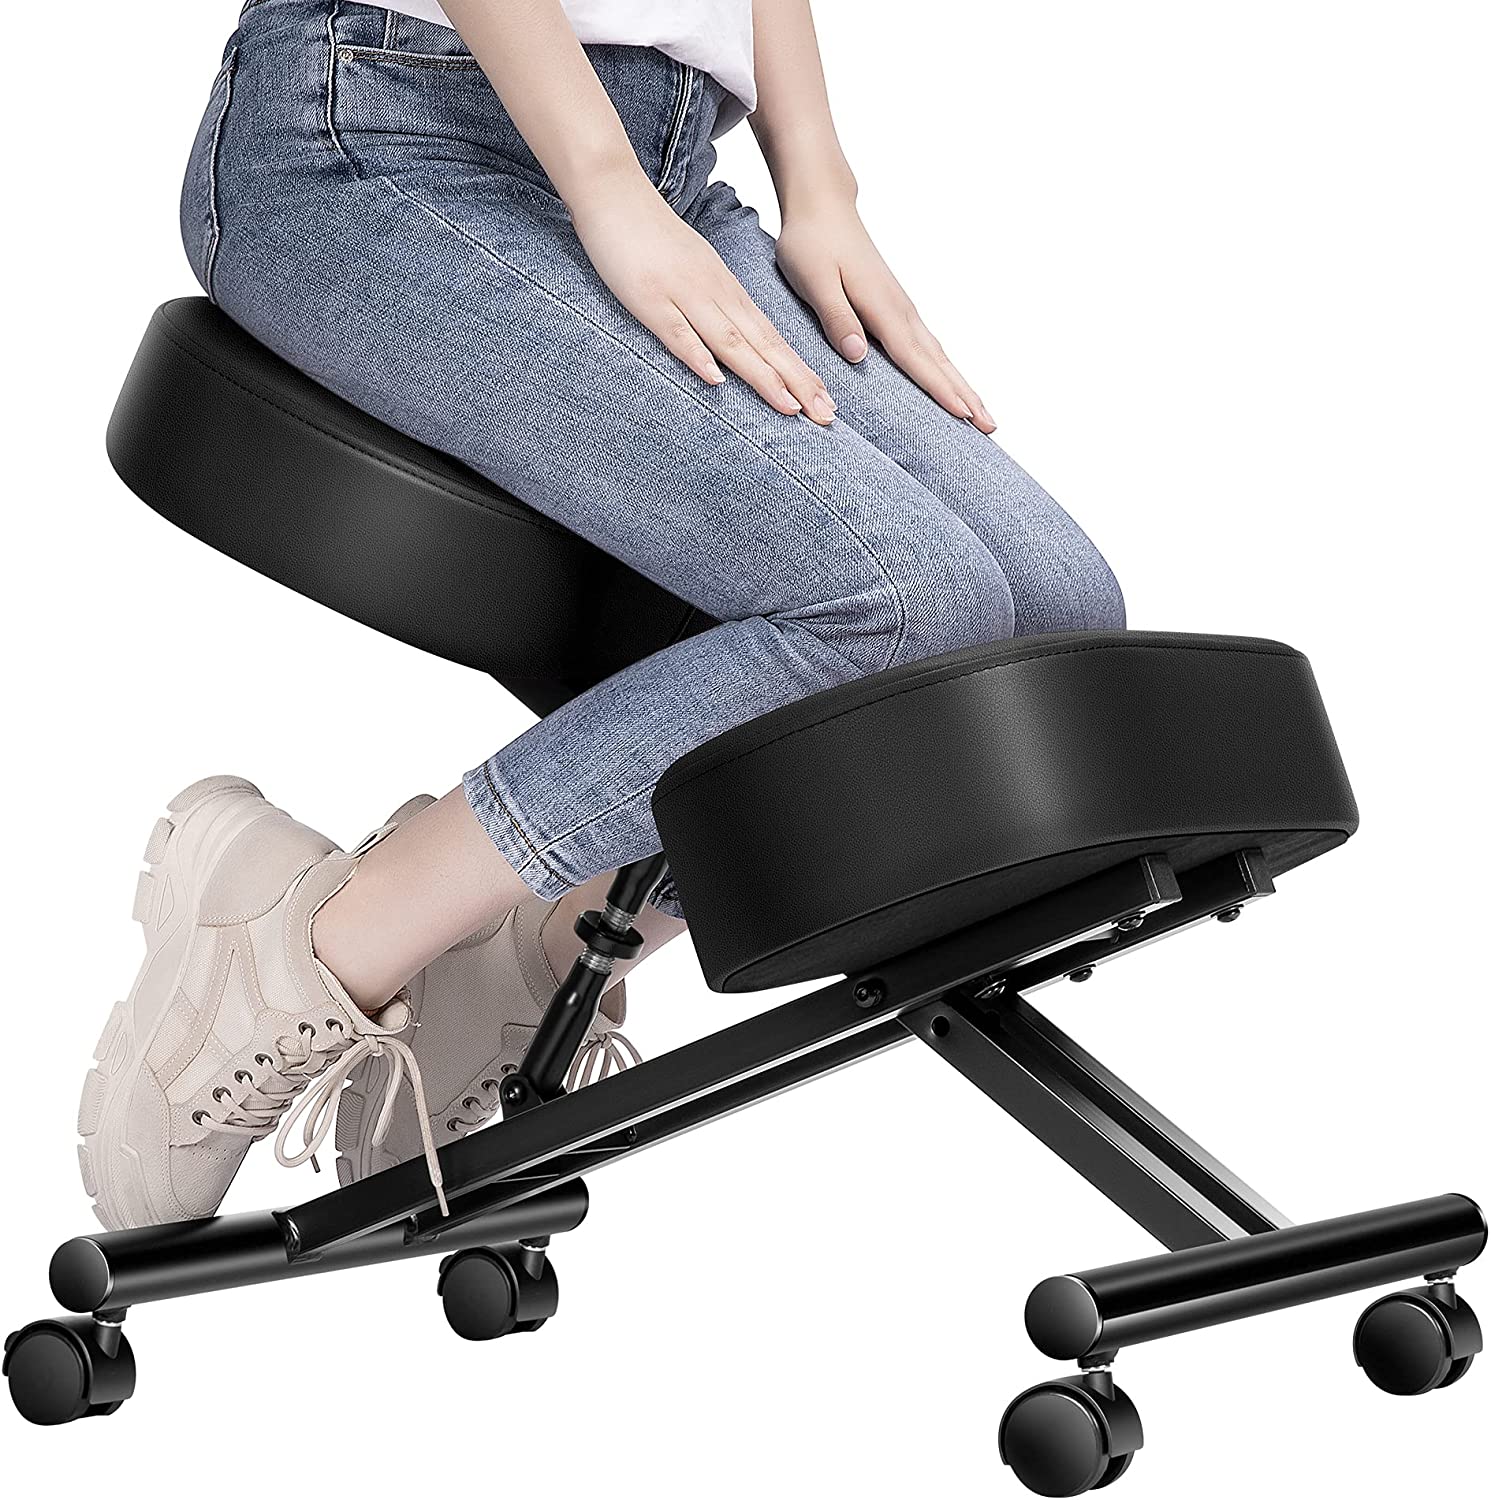 Adjustable Ergonomic Kneeling Chair with Back Support